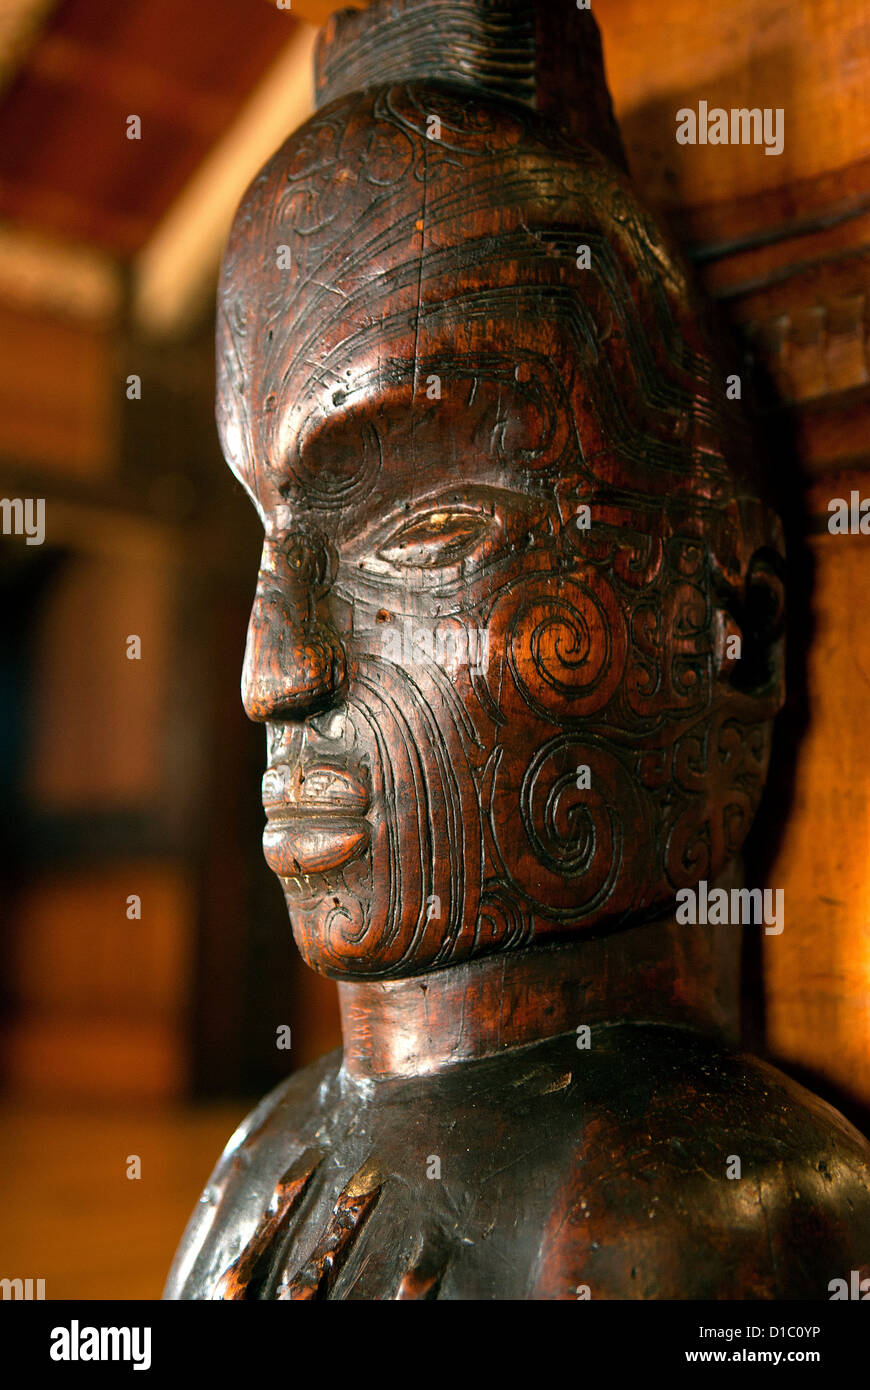 New Zealand. A tekoteko carving or man-like figure, represents a Maori tribe's common ancestor. Stock Photo